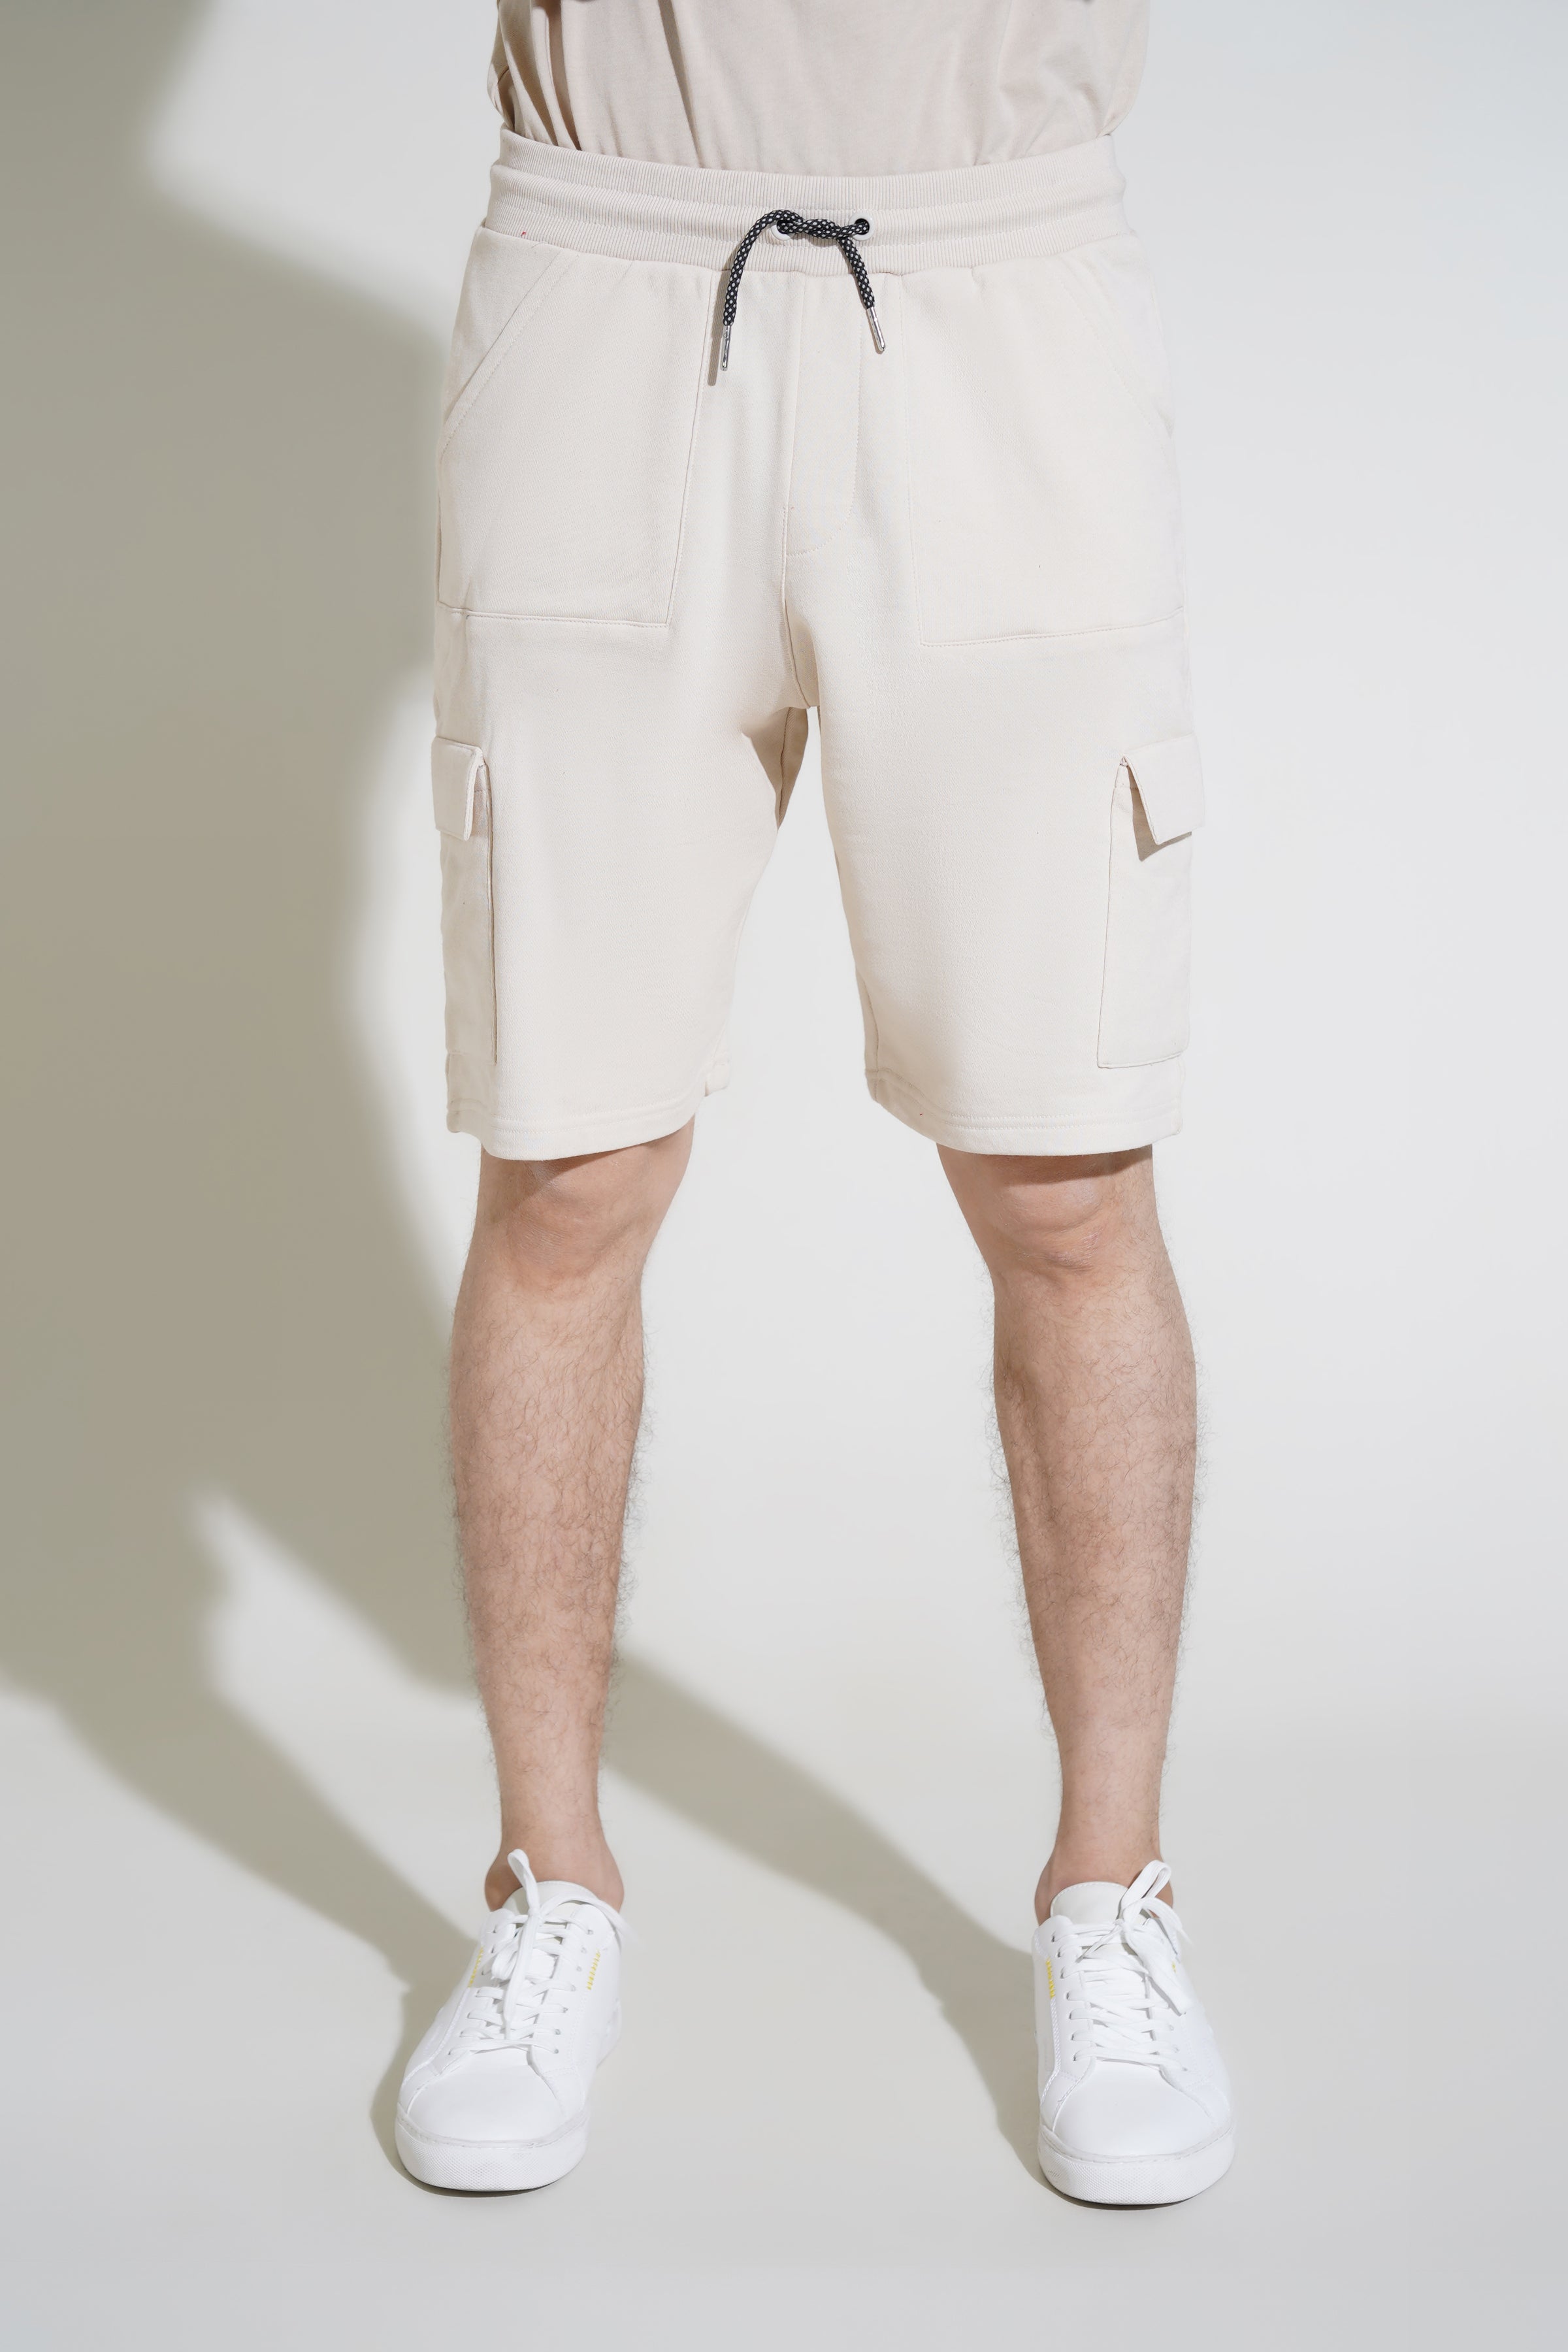 White Shorts Gents